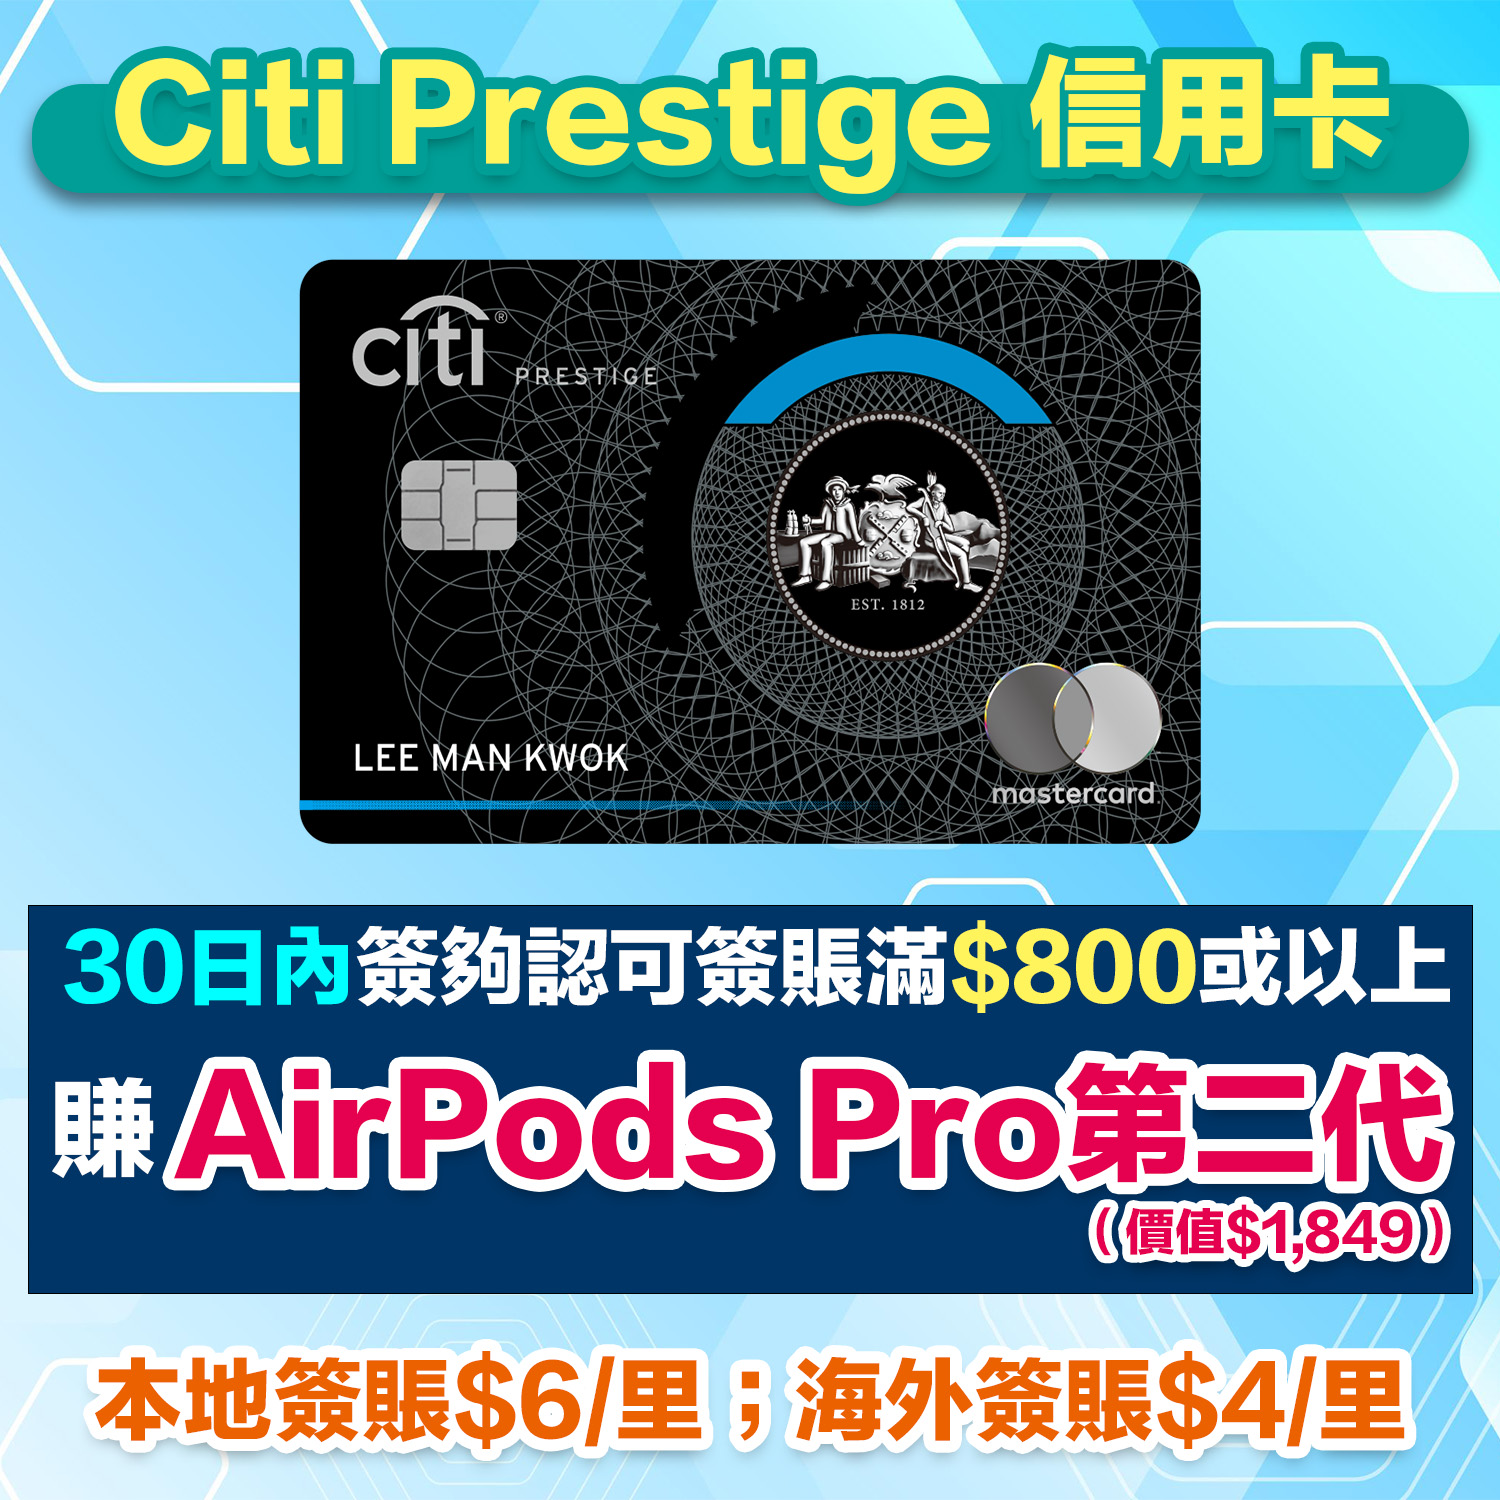 Citi Prestige 信用卡｜本地5星酒店住1晚送1晚 米芝蓮官方合作夥伴 平日HK$6=1里可換多個里數計劃！經里先生迎新簽HK$800有AirPods Pro 2！